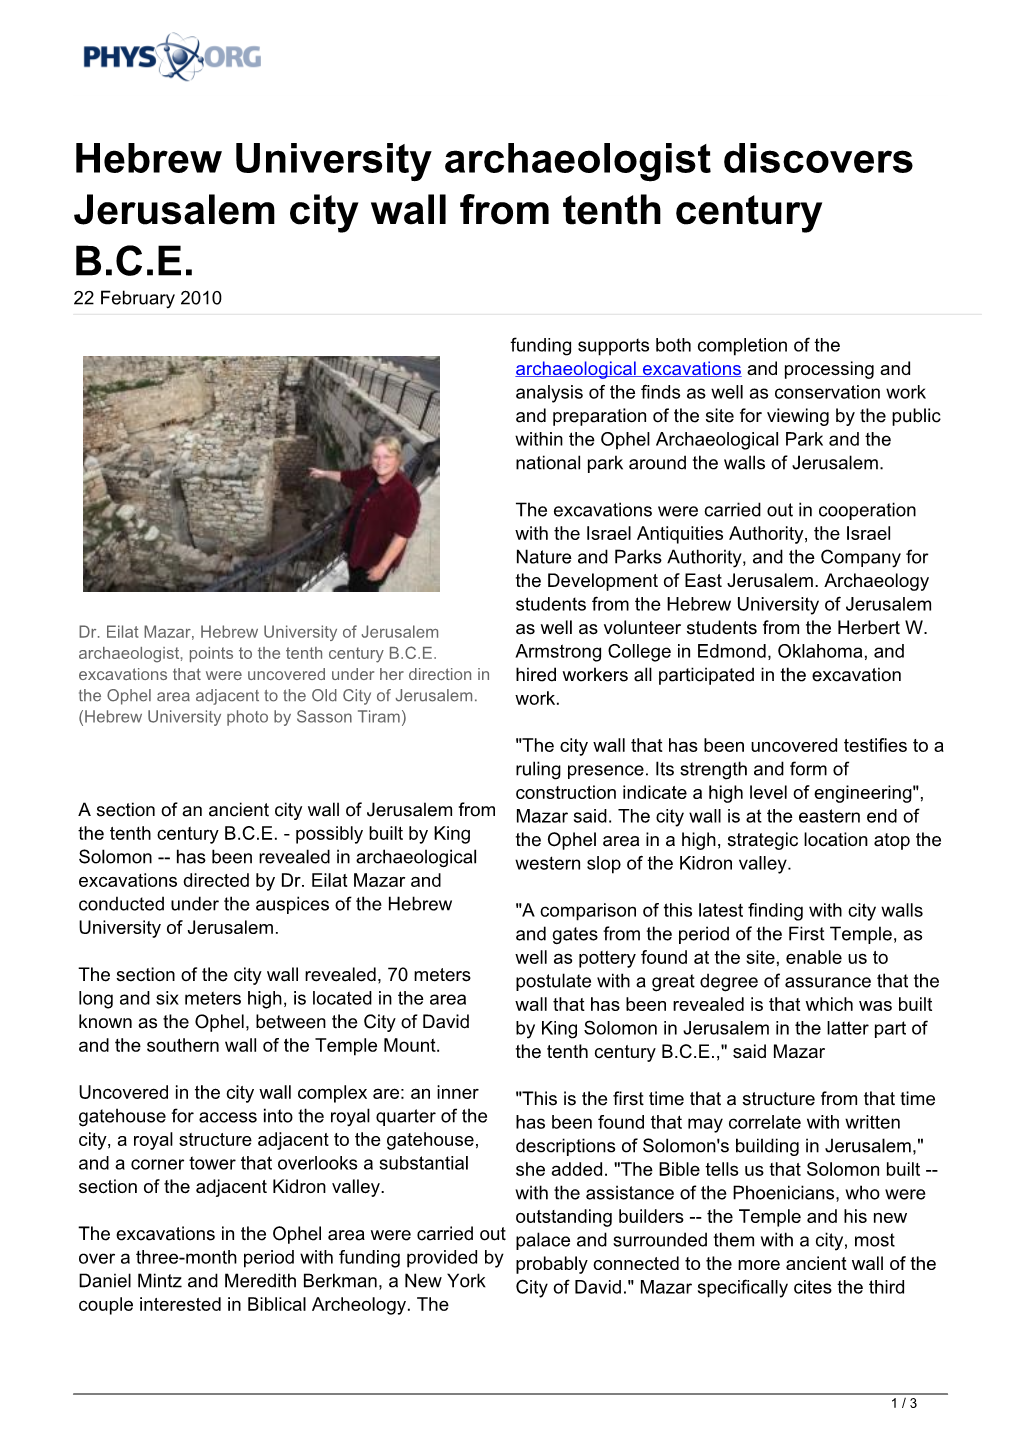 Hebrew University Archaeologist Discovers Jerusalem City Wall from Tenth Century B.C.E